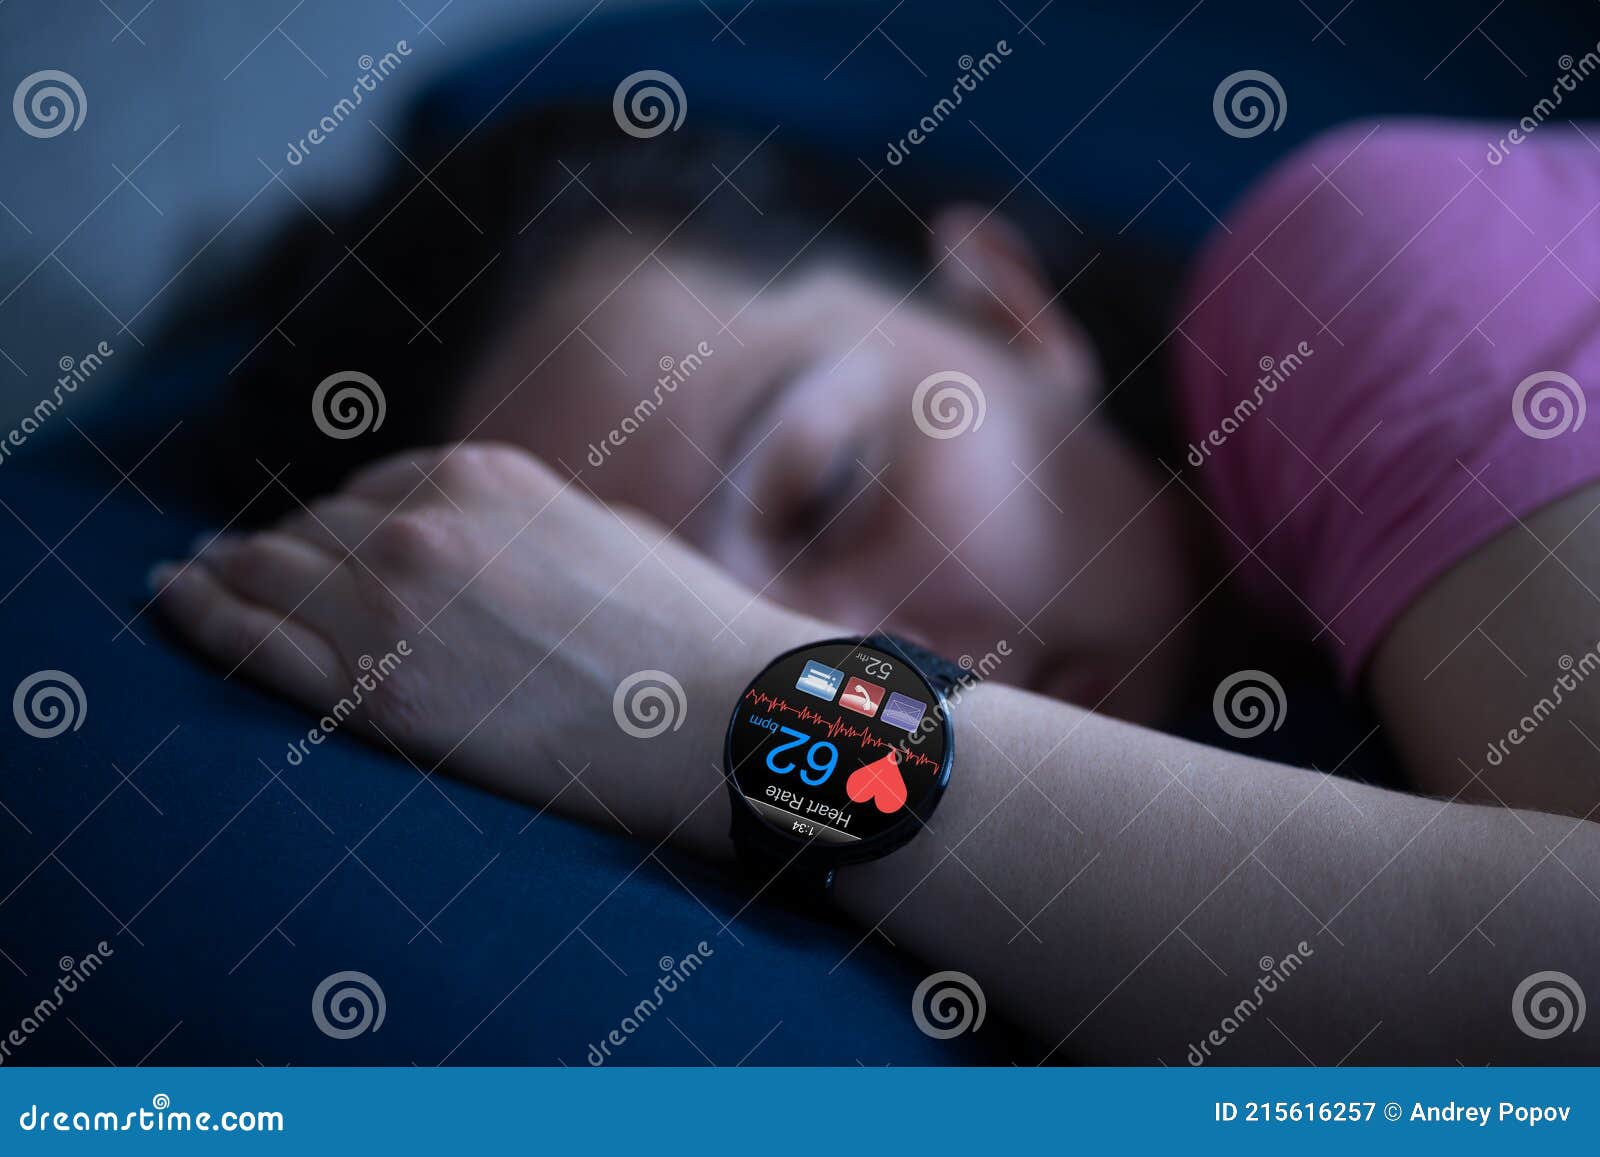 wearable sleep tracking heart rate monitor smartwatch